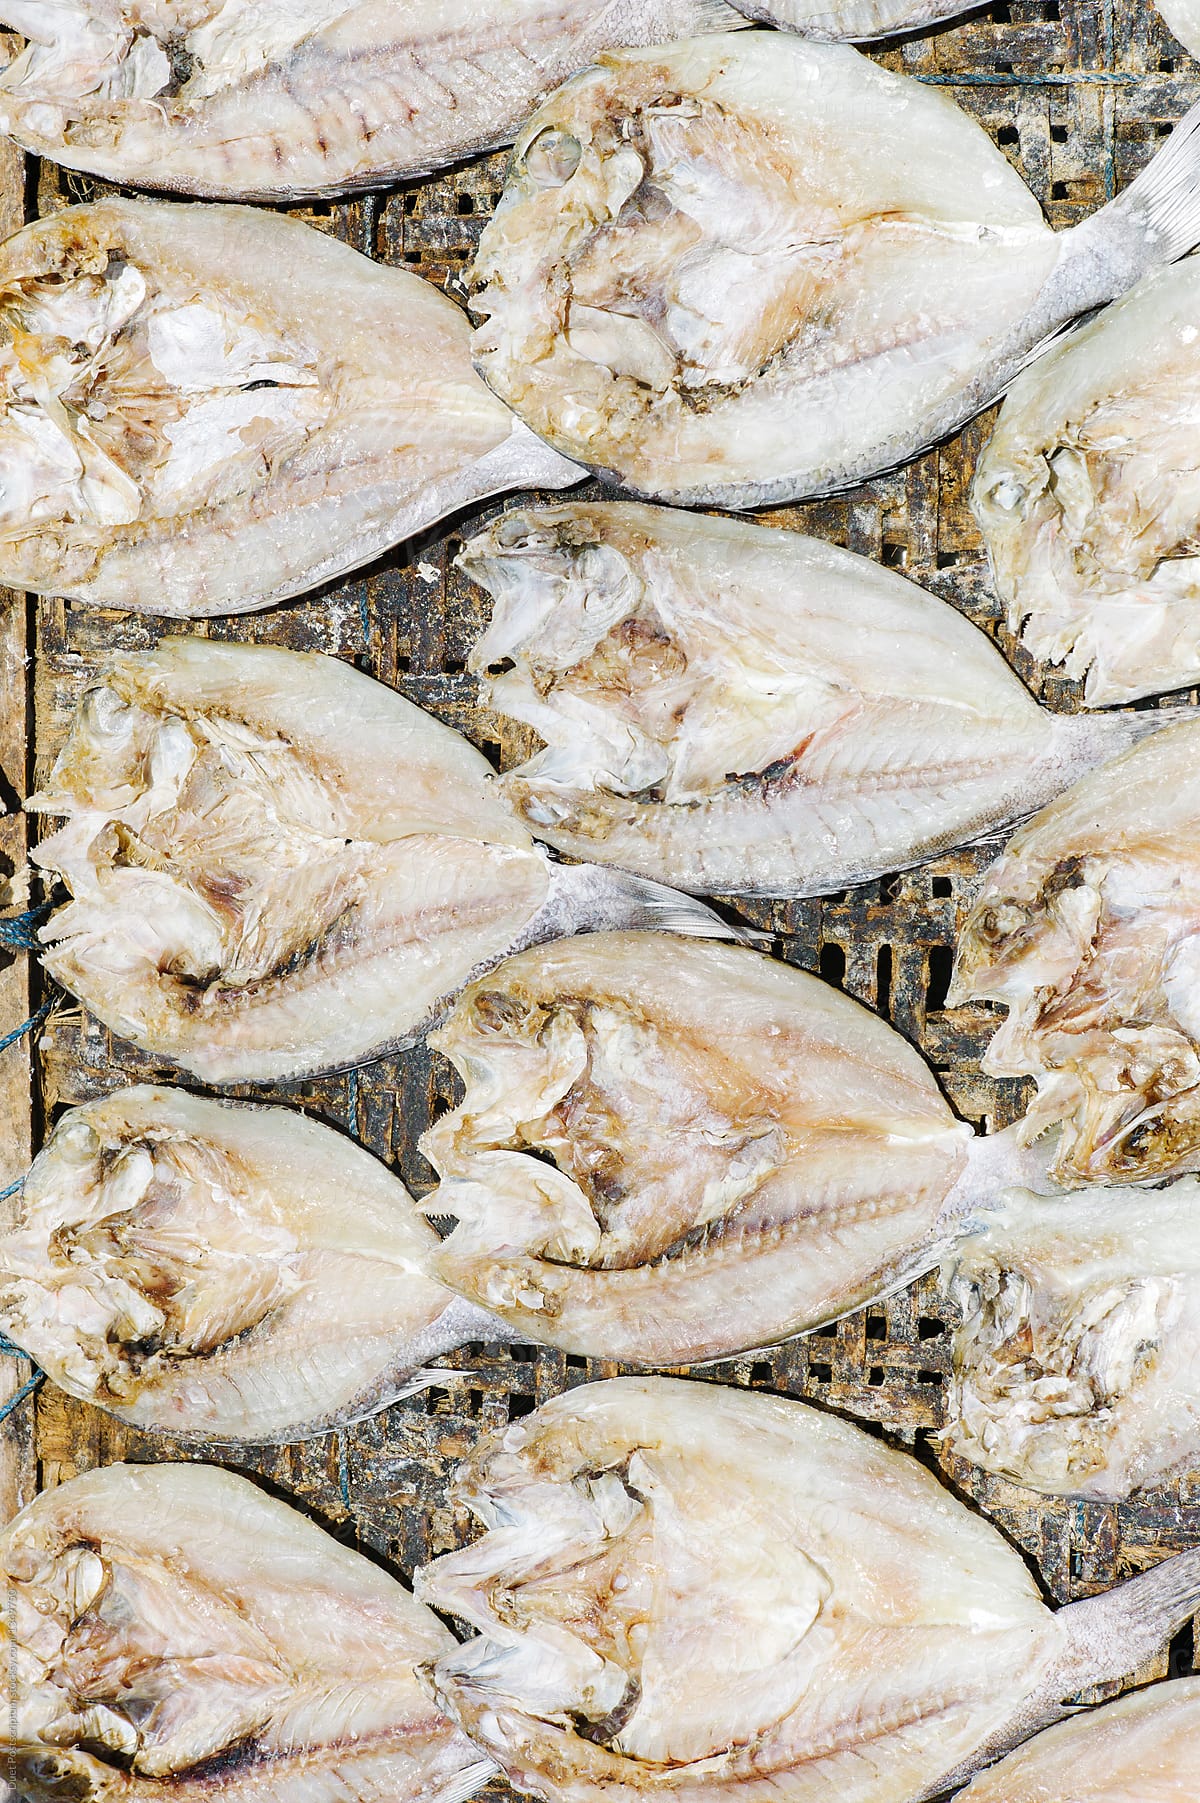 The prepared fish fillets